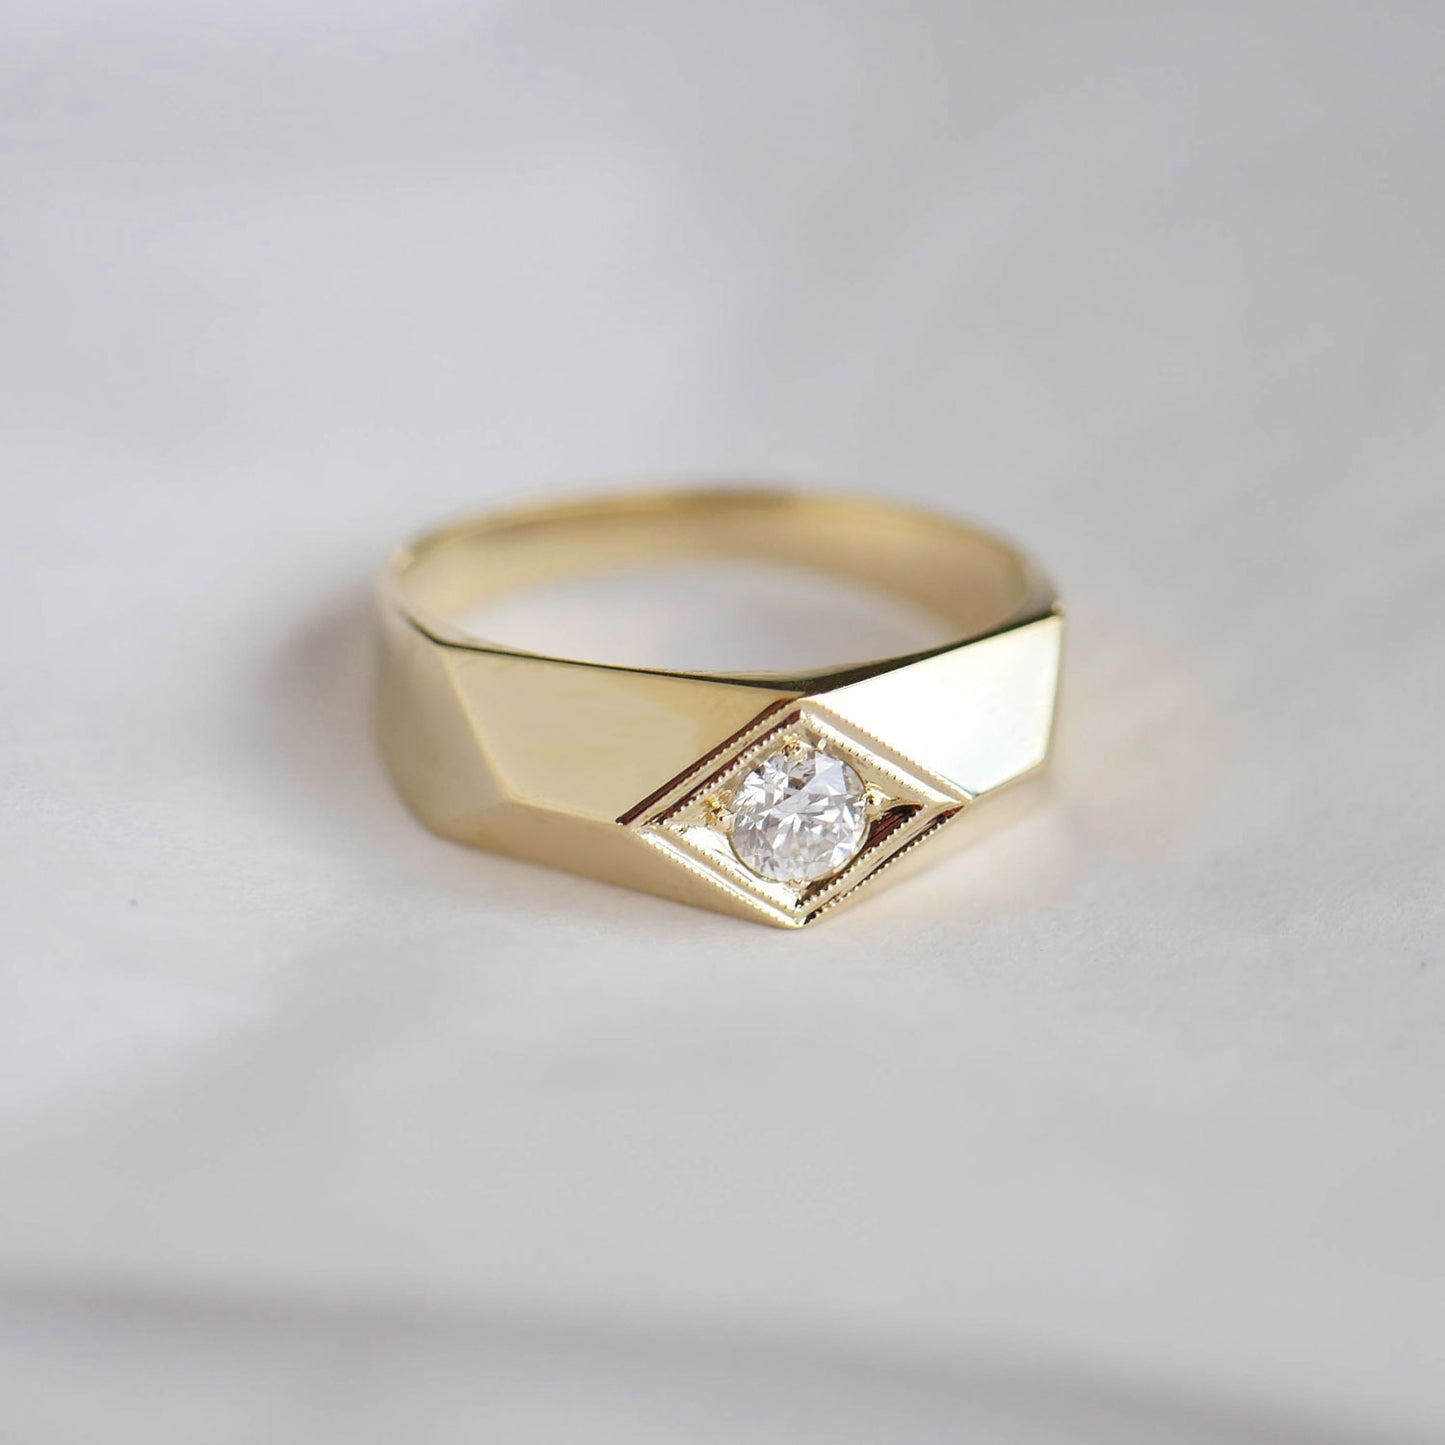 The Fitzgerald Diamond Ring